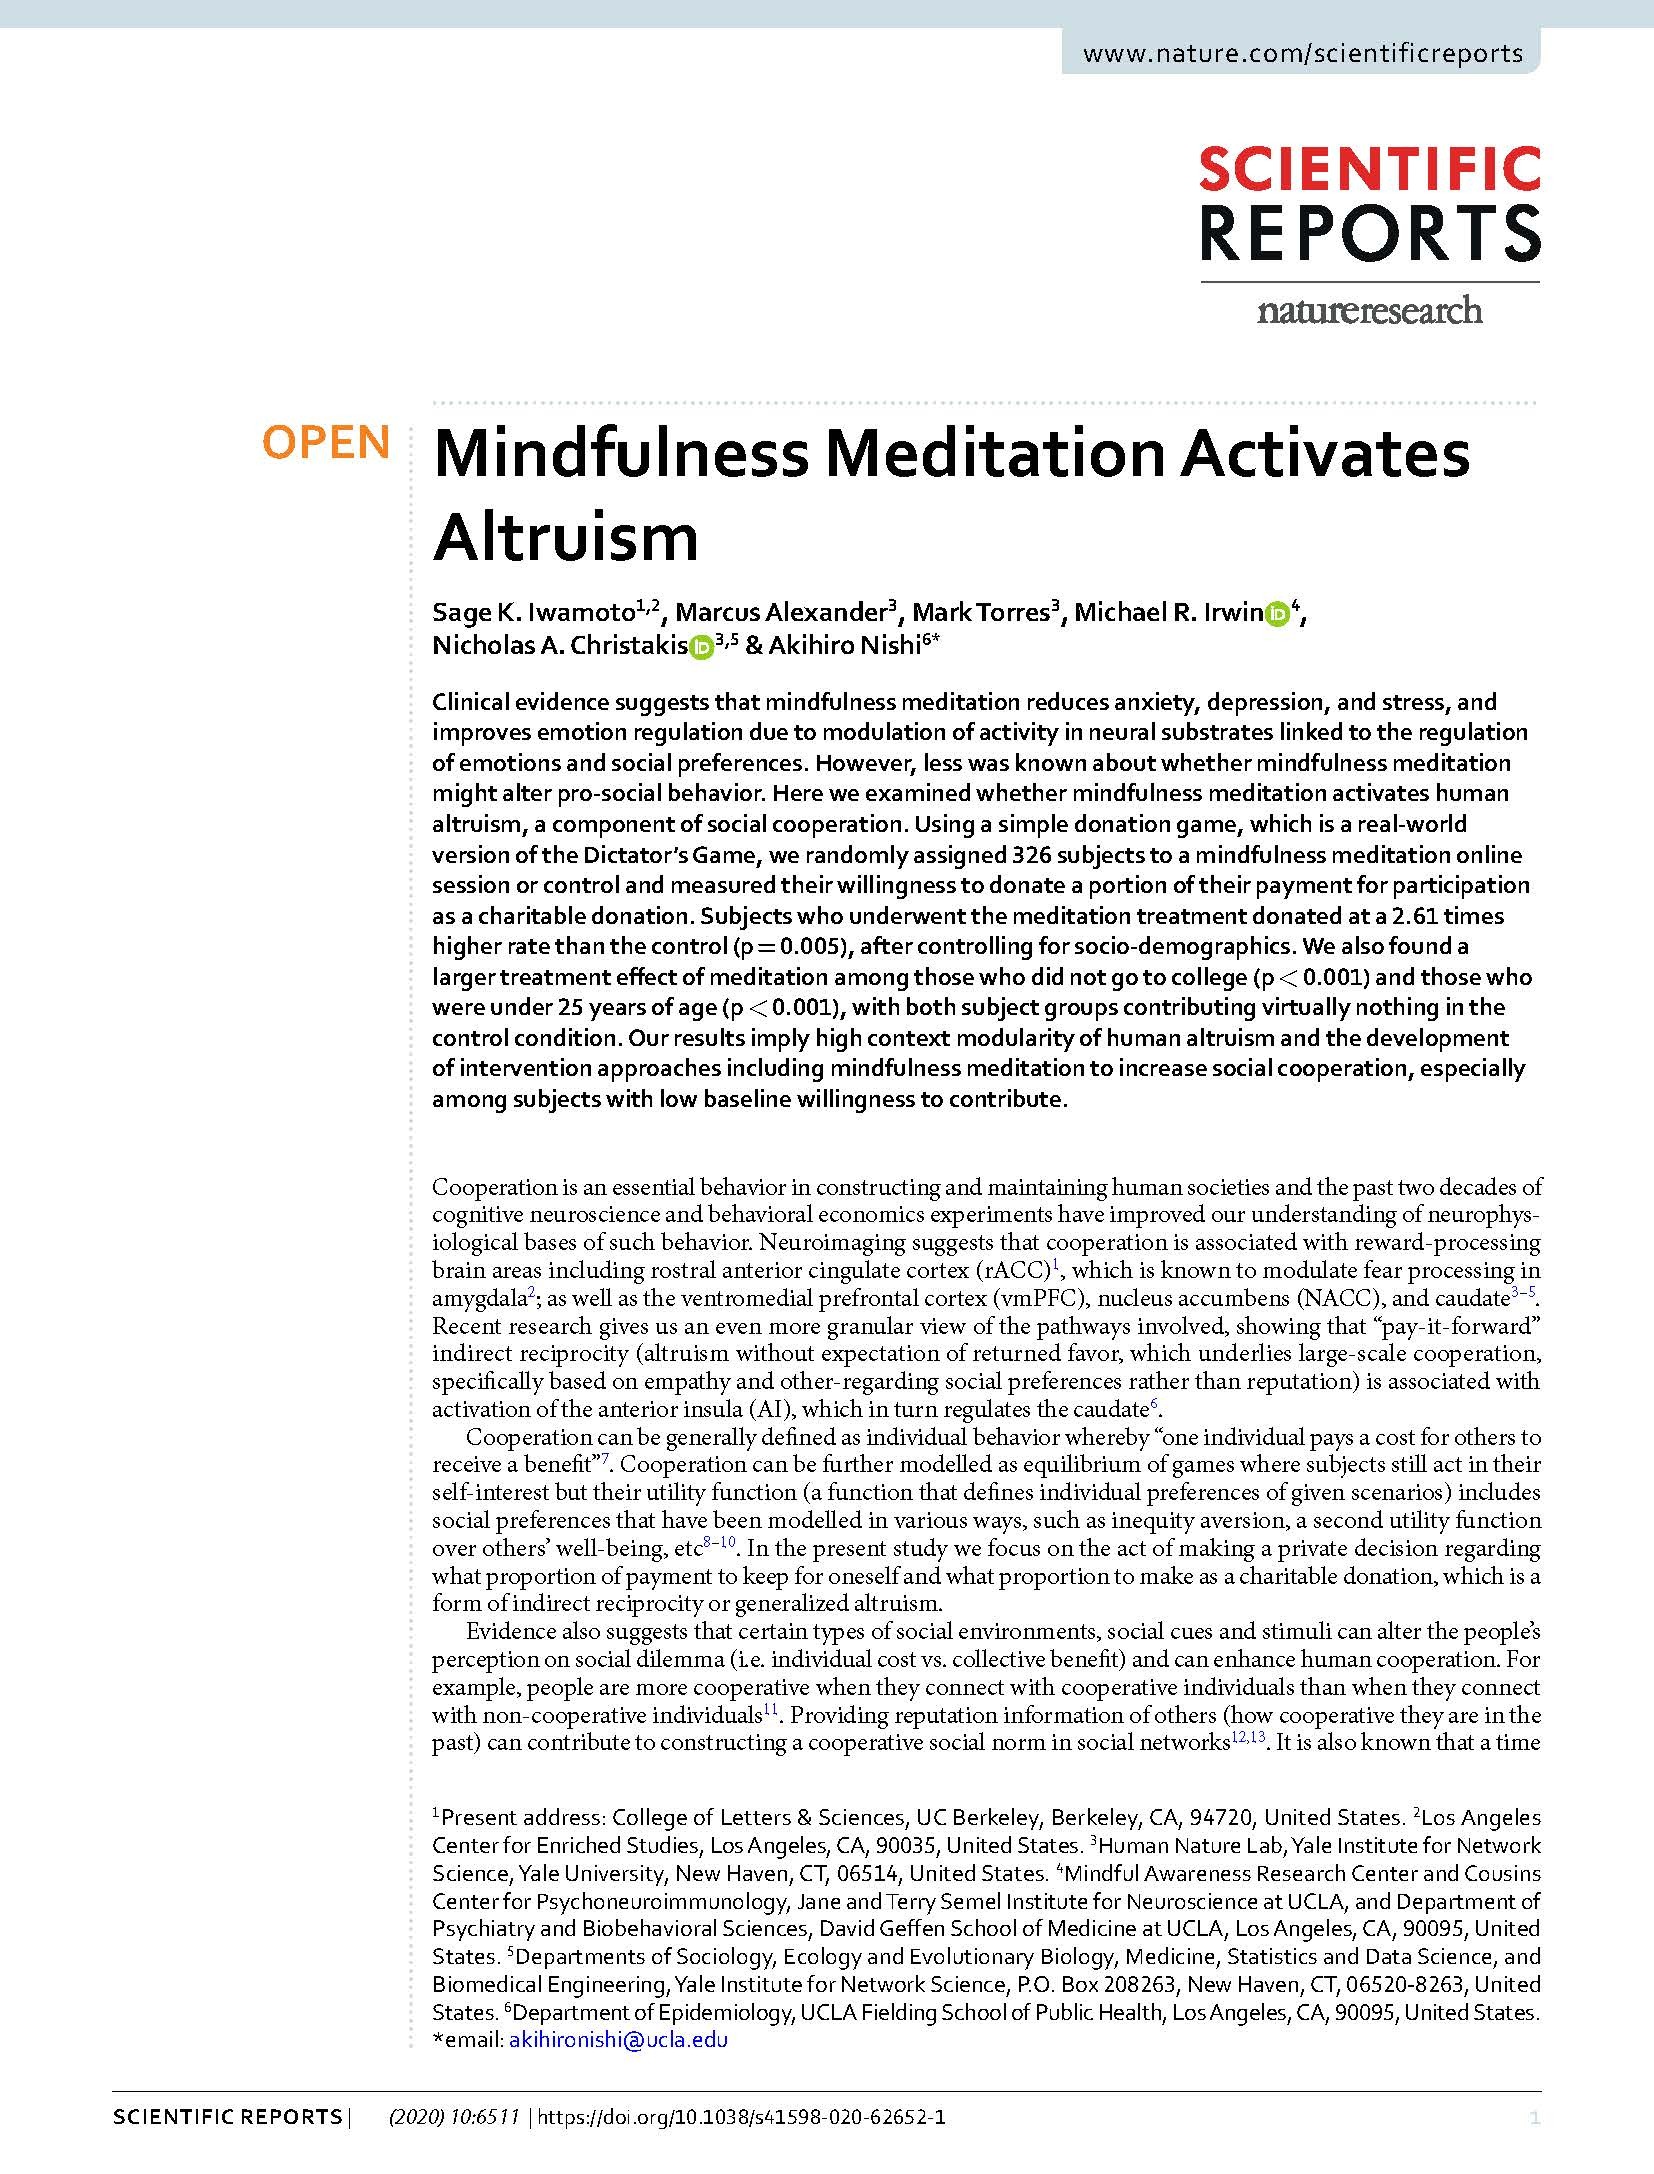 "Mindfulness